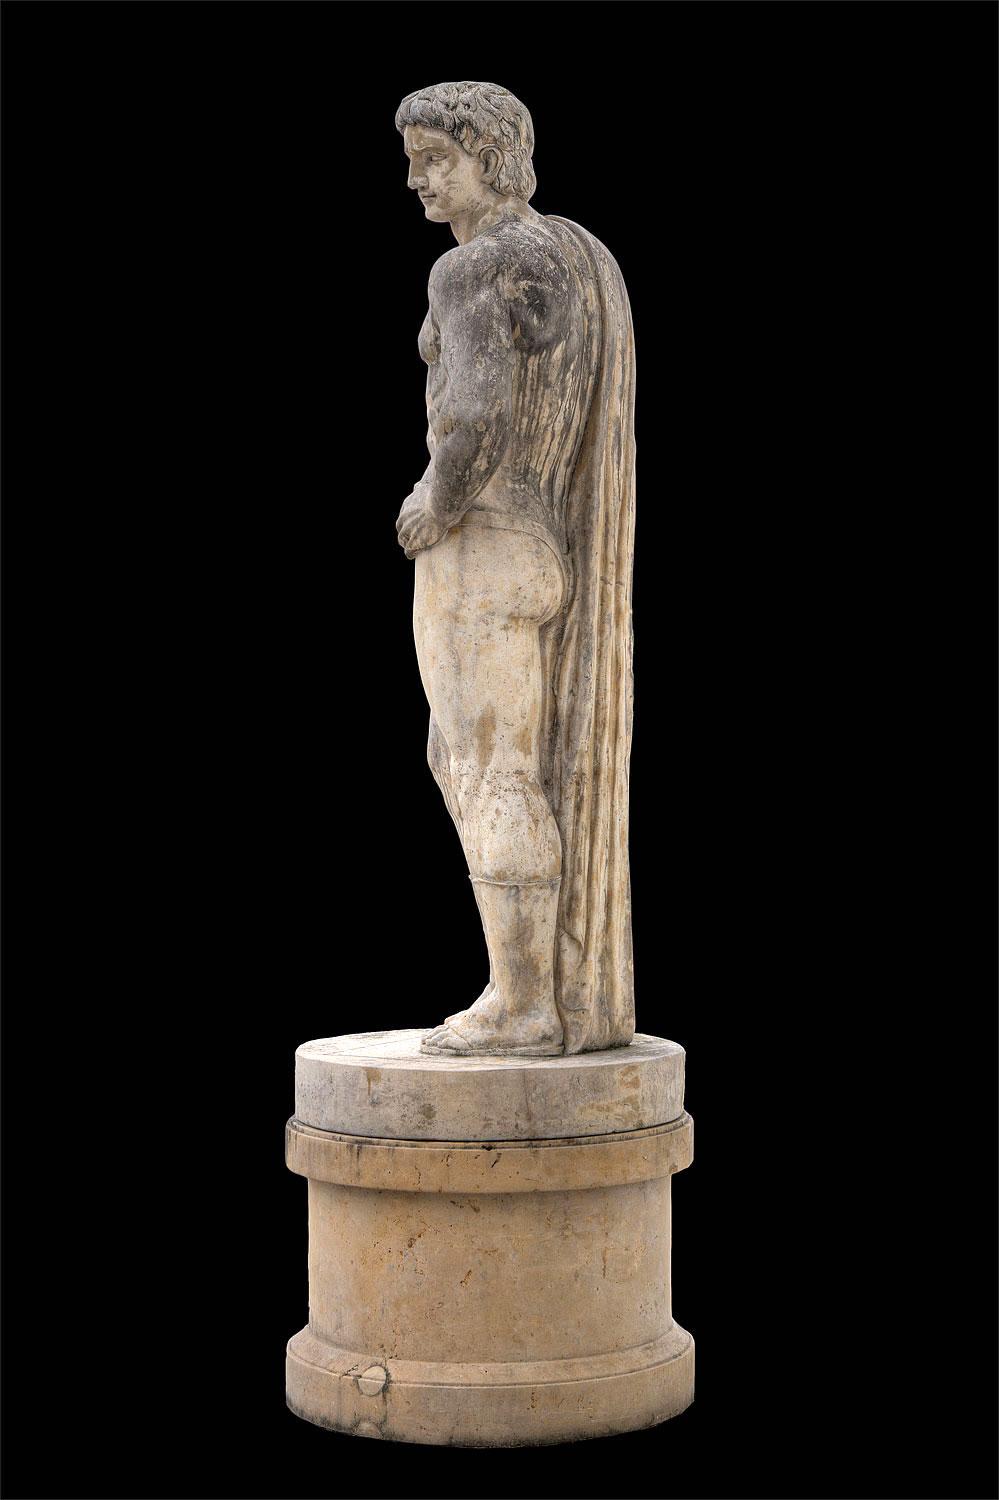  Figuratif figuratif italien en marbre monumental de style rationaliste  Sculptures de nus en vente 9